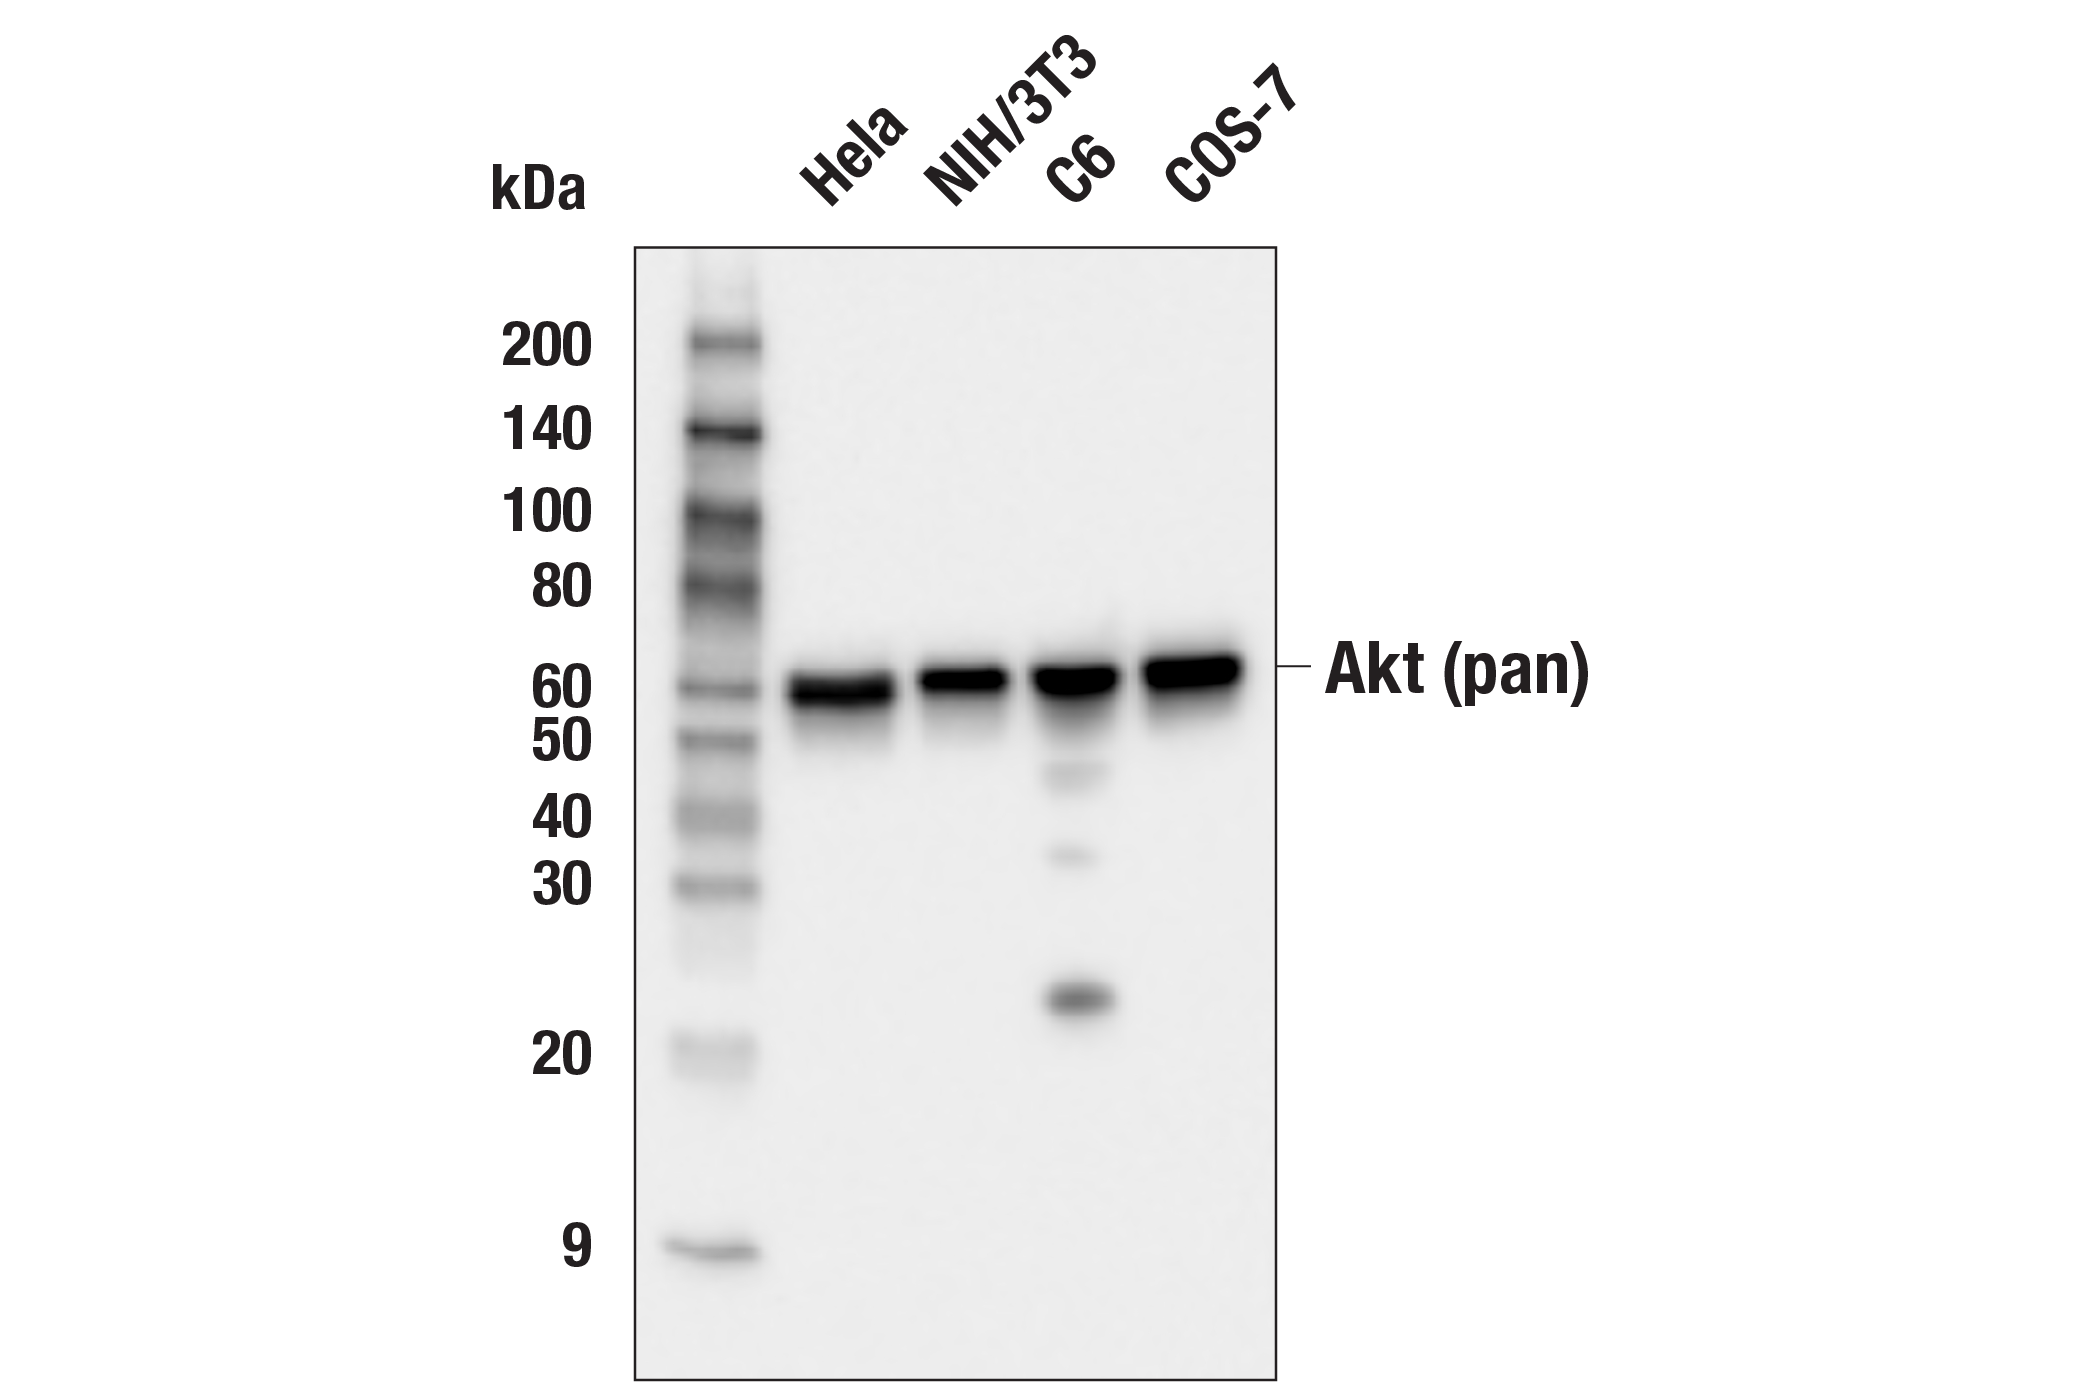  Image 3: PhosphoPlus® Akt (Ser473) Antibody Duet